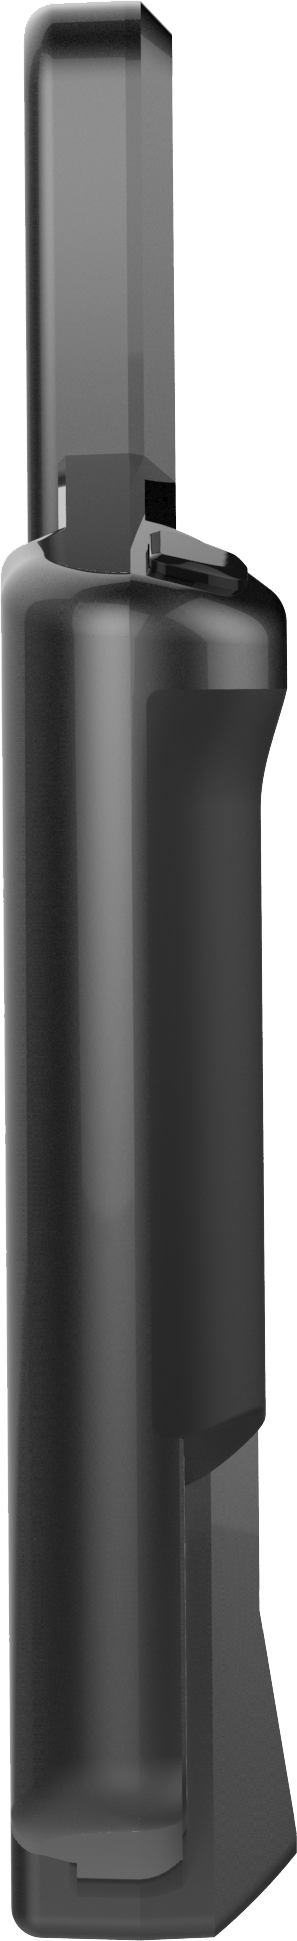 Fuel3D scanner side view